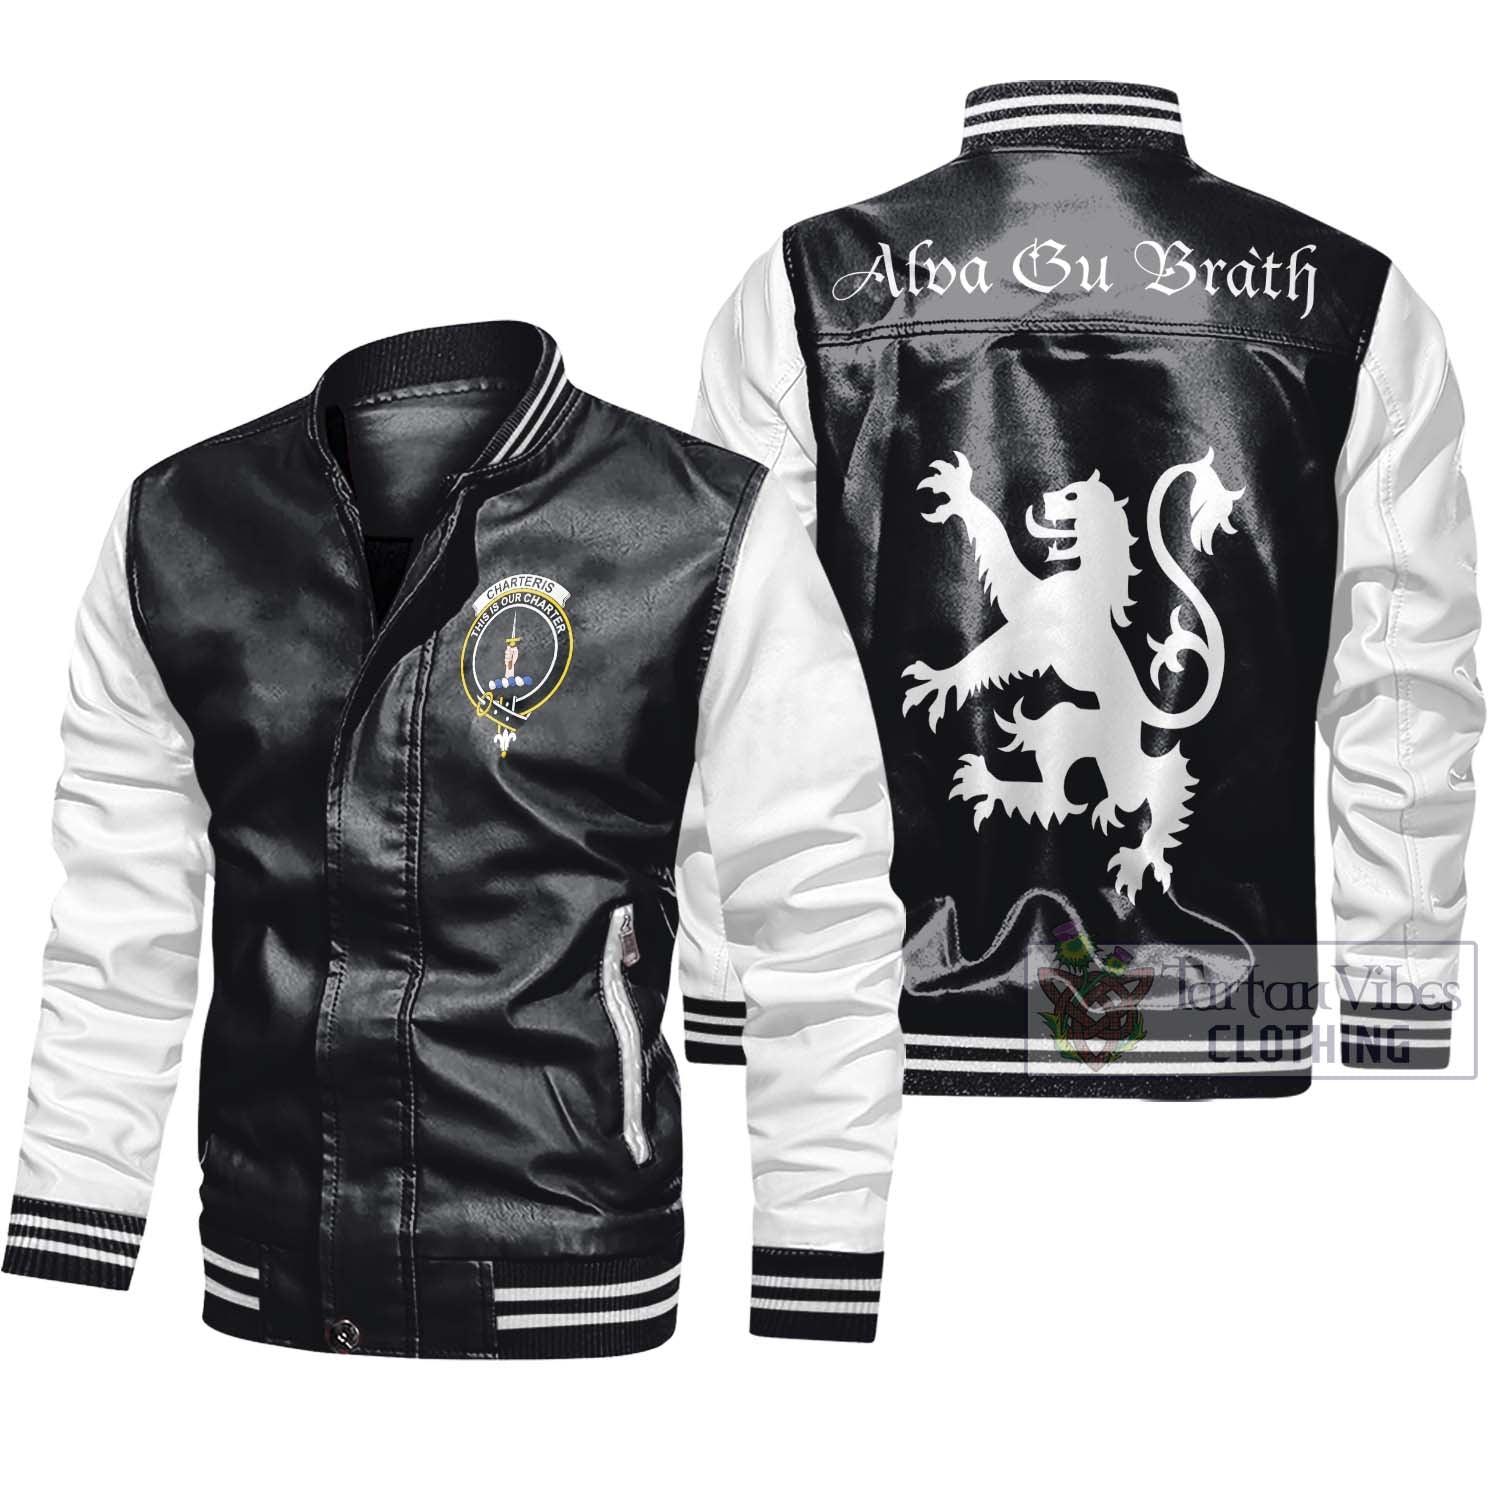 Tartan Vibes Clothing Charteris Family Crest Leather Bomber Jacket Lion Rampant Alba Gu Brath Style